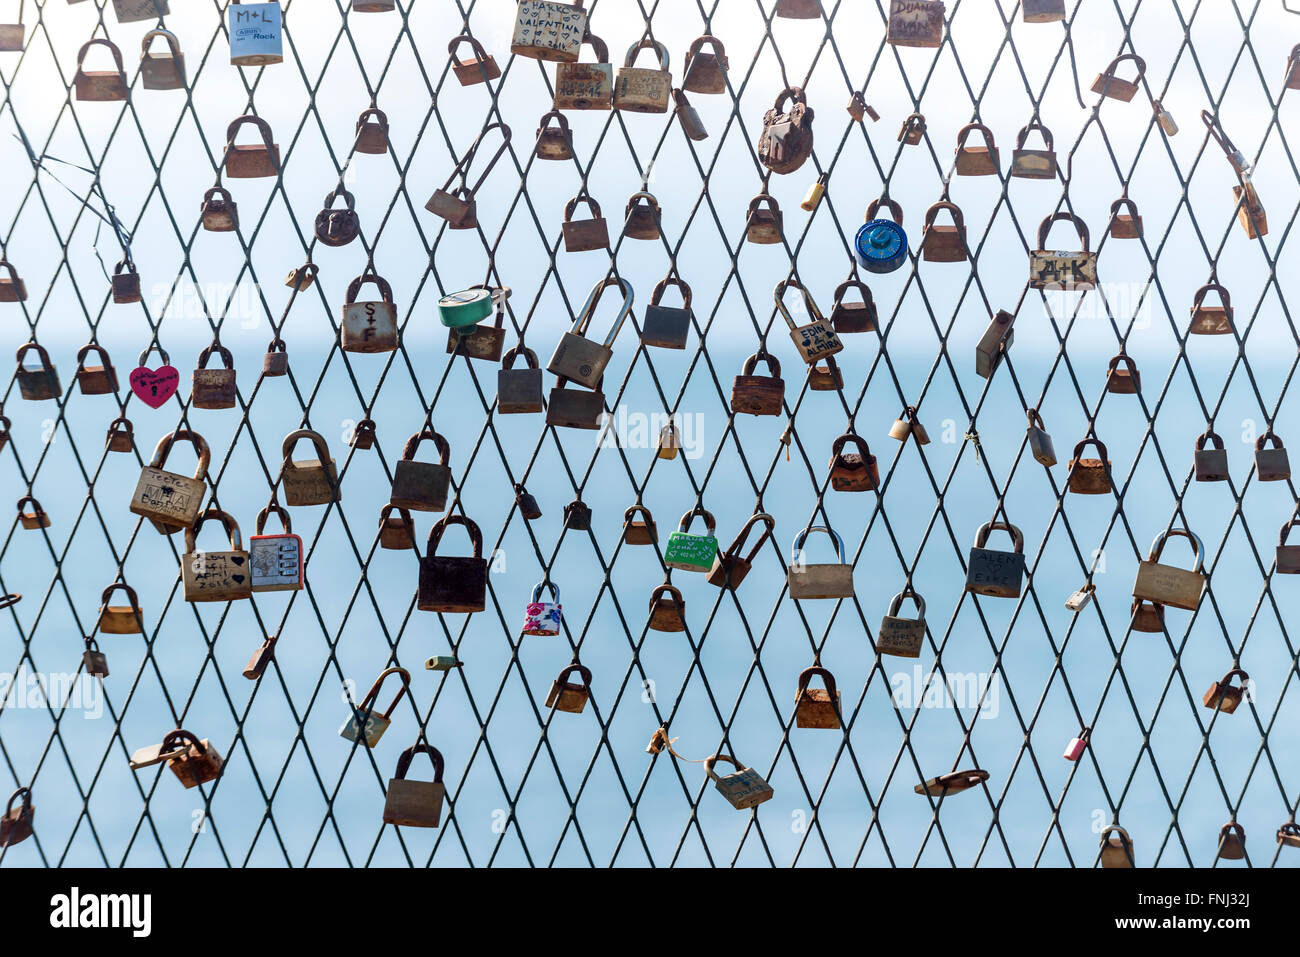 Love-locks on a fence at Boninovo, Dubrovnik, Croatia. Stock Photo